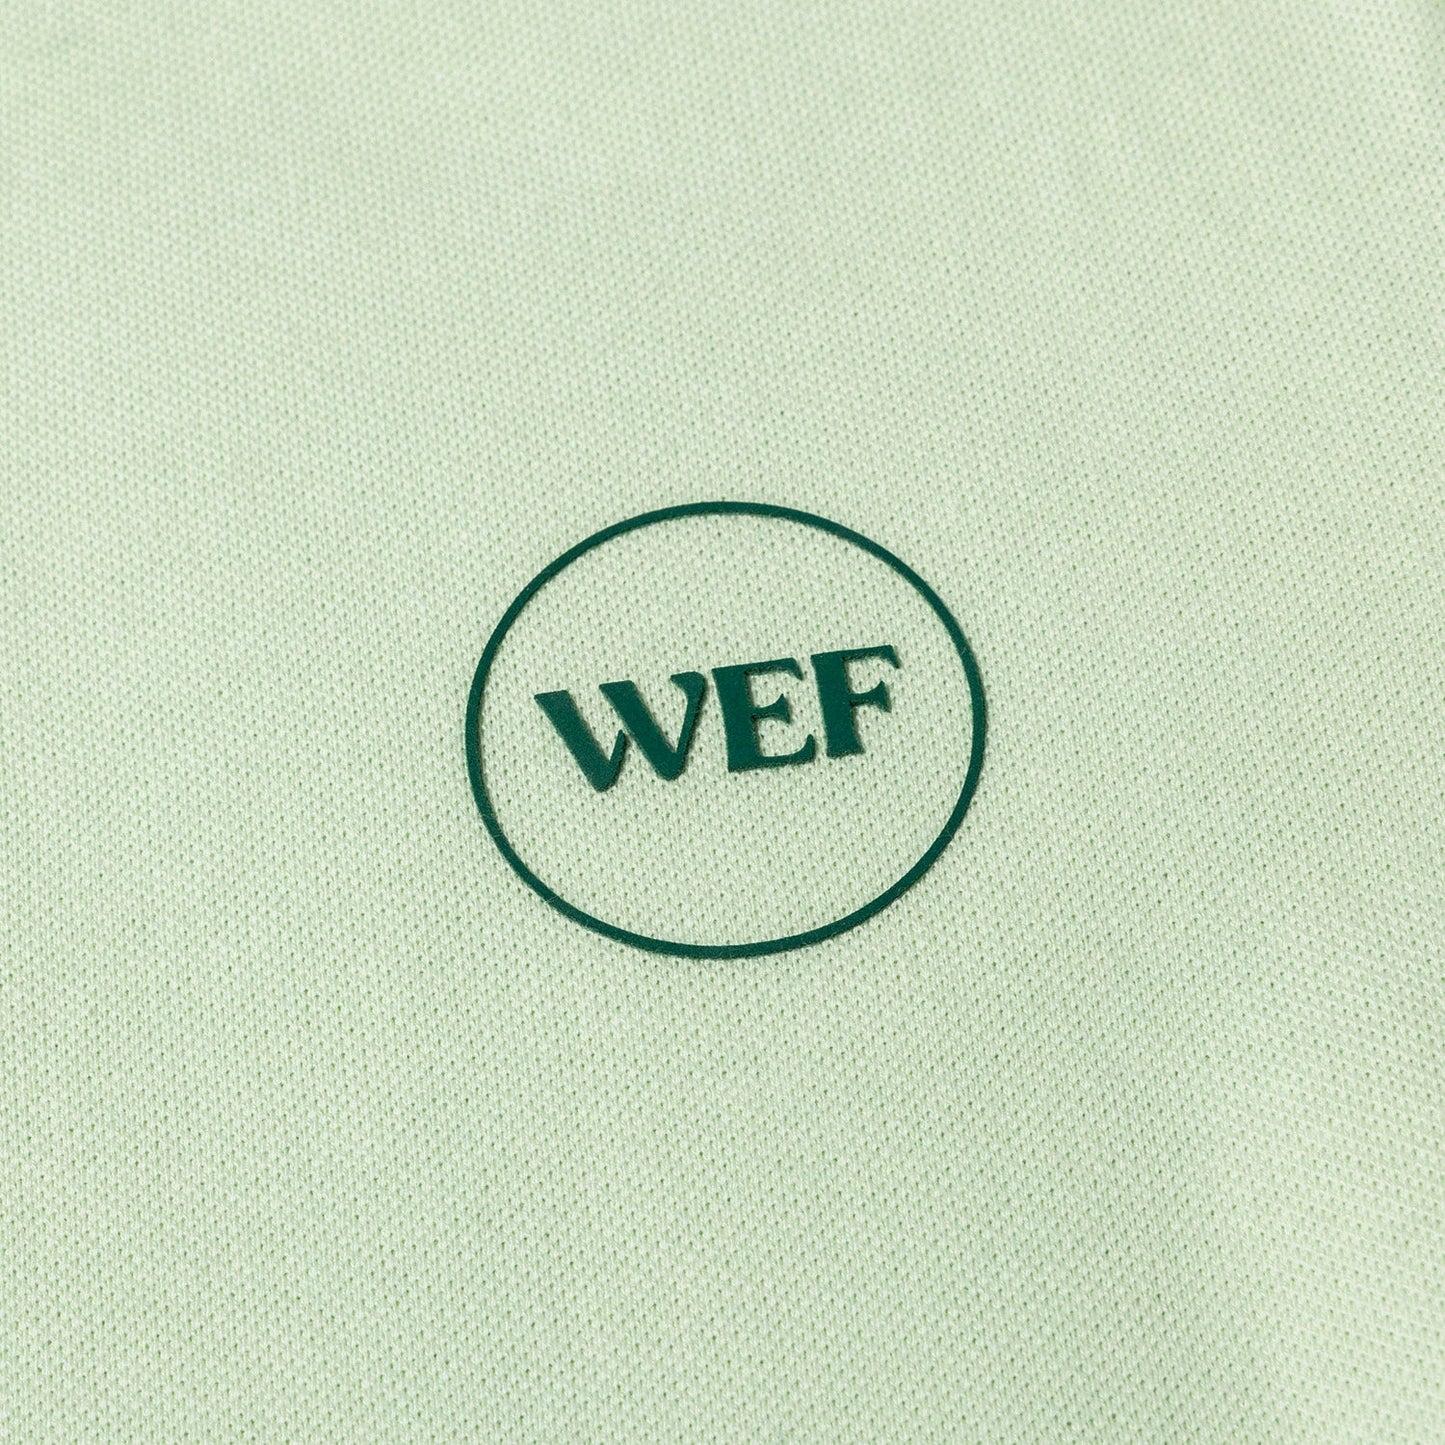 WEF Mens Polo Shirt